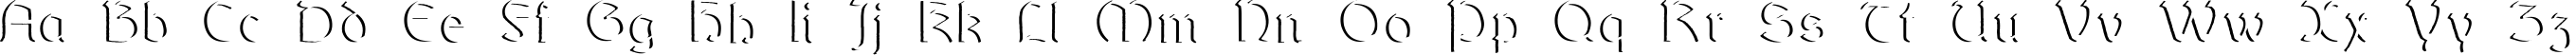 Пример написания английского алфавита шрифтом DundalkEmbossed